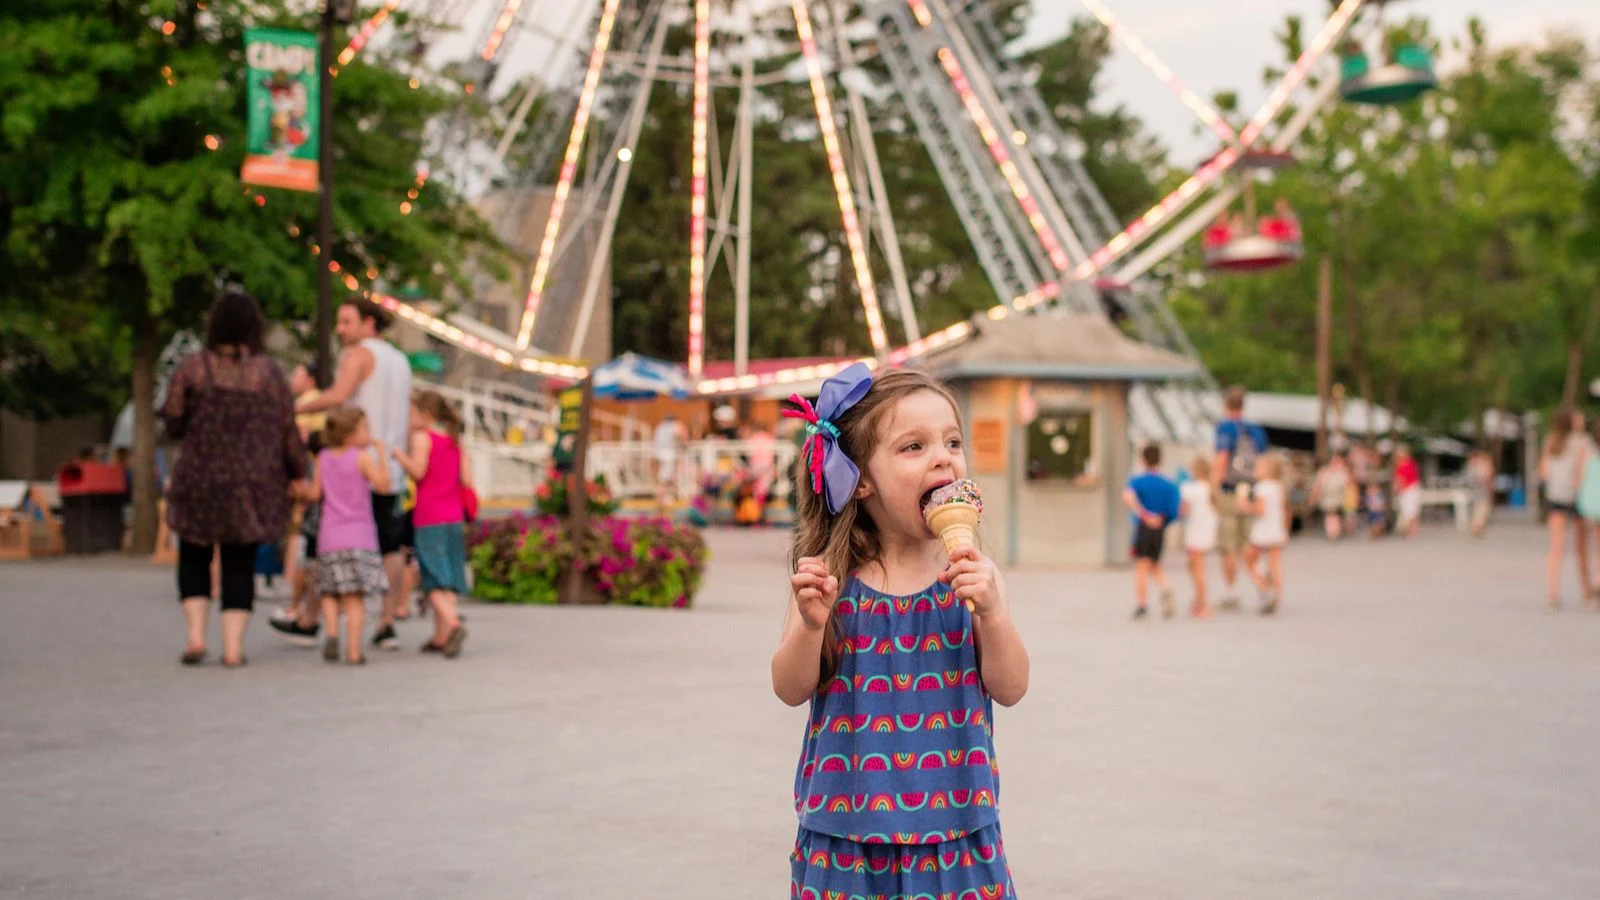 Recommendations for Kid-Friendly Amusement Parks